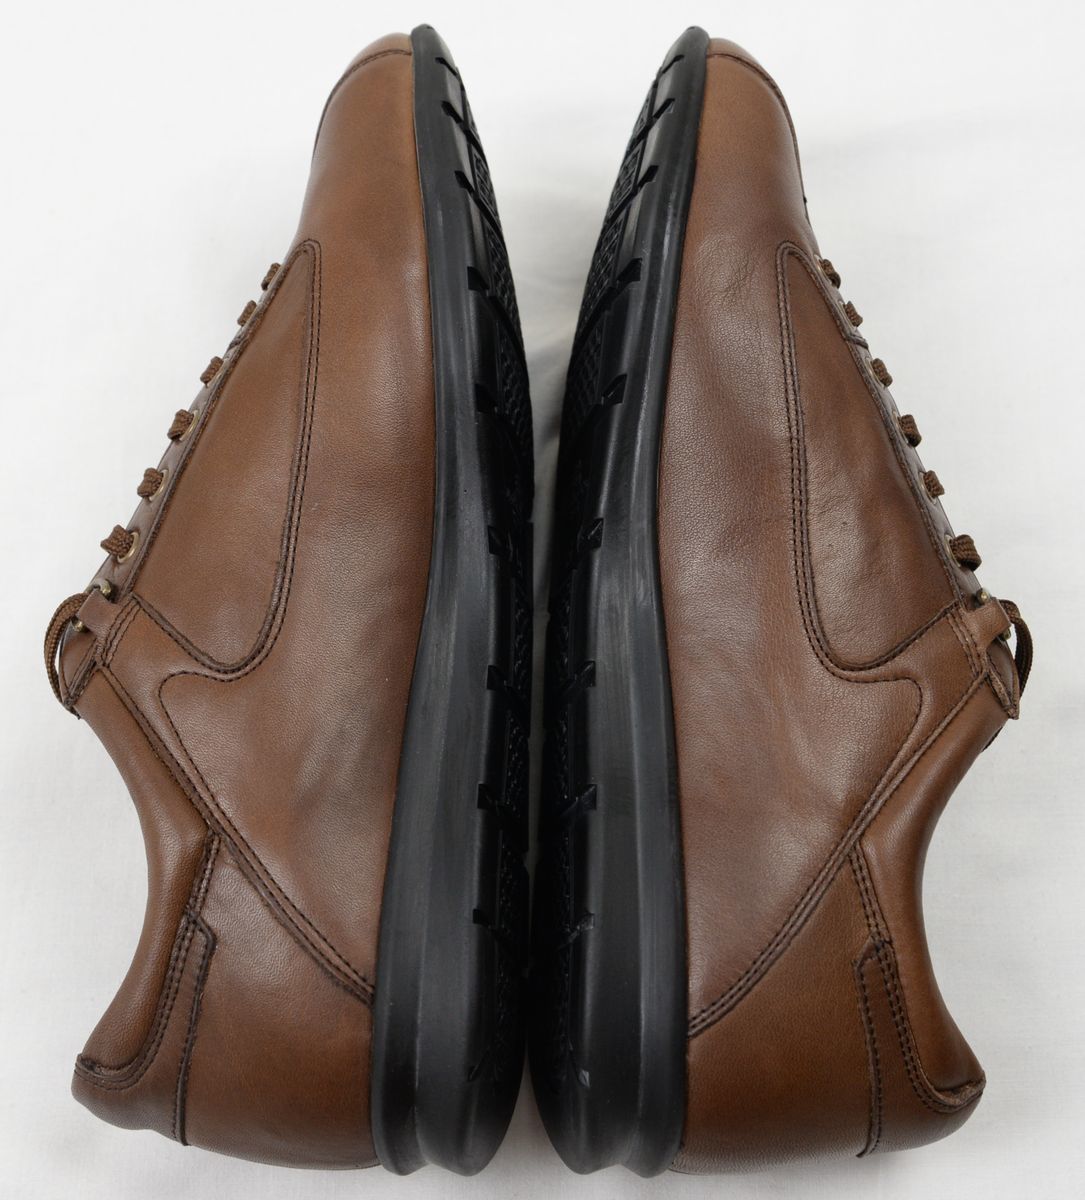 * regular price 30800 jpy madrasma gong s men's leather sneakers ( tea,26.0,M5005G,GORE-TEX, made in Japan ) new goods 